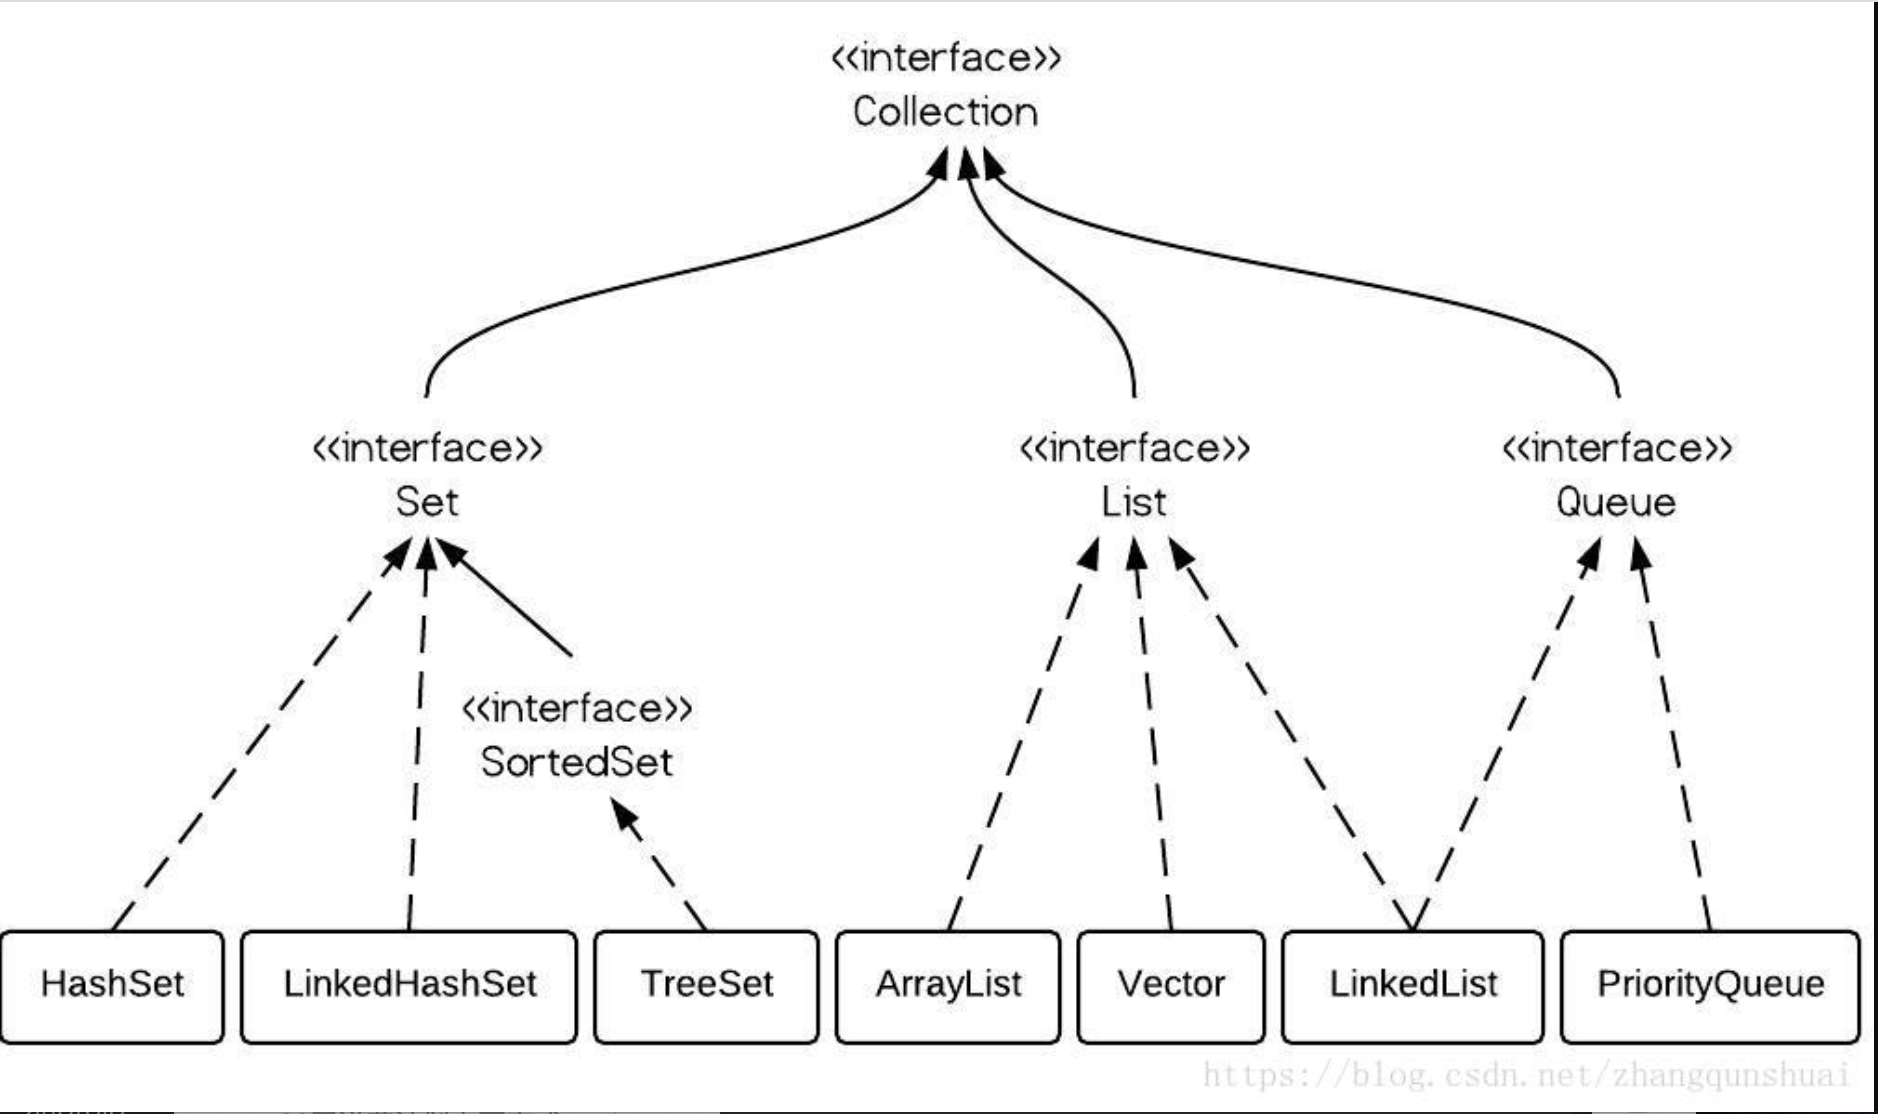 Hash java. Иерархия интерфейсов коллекций java. Структура коллекций java. Java collections Framework иерархия. Java collections Hierarchy.